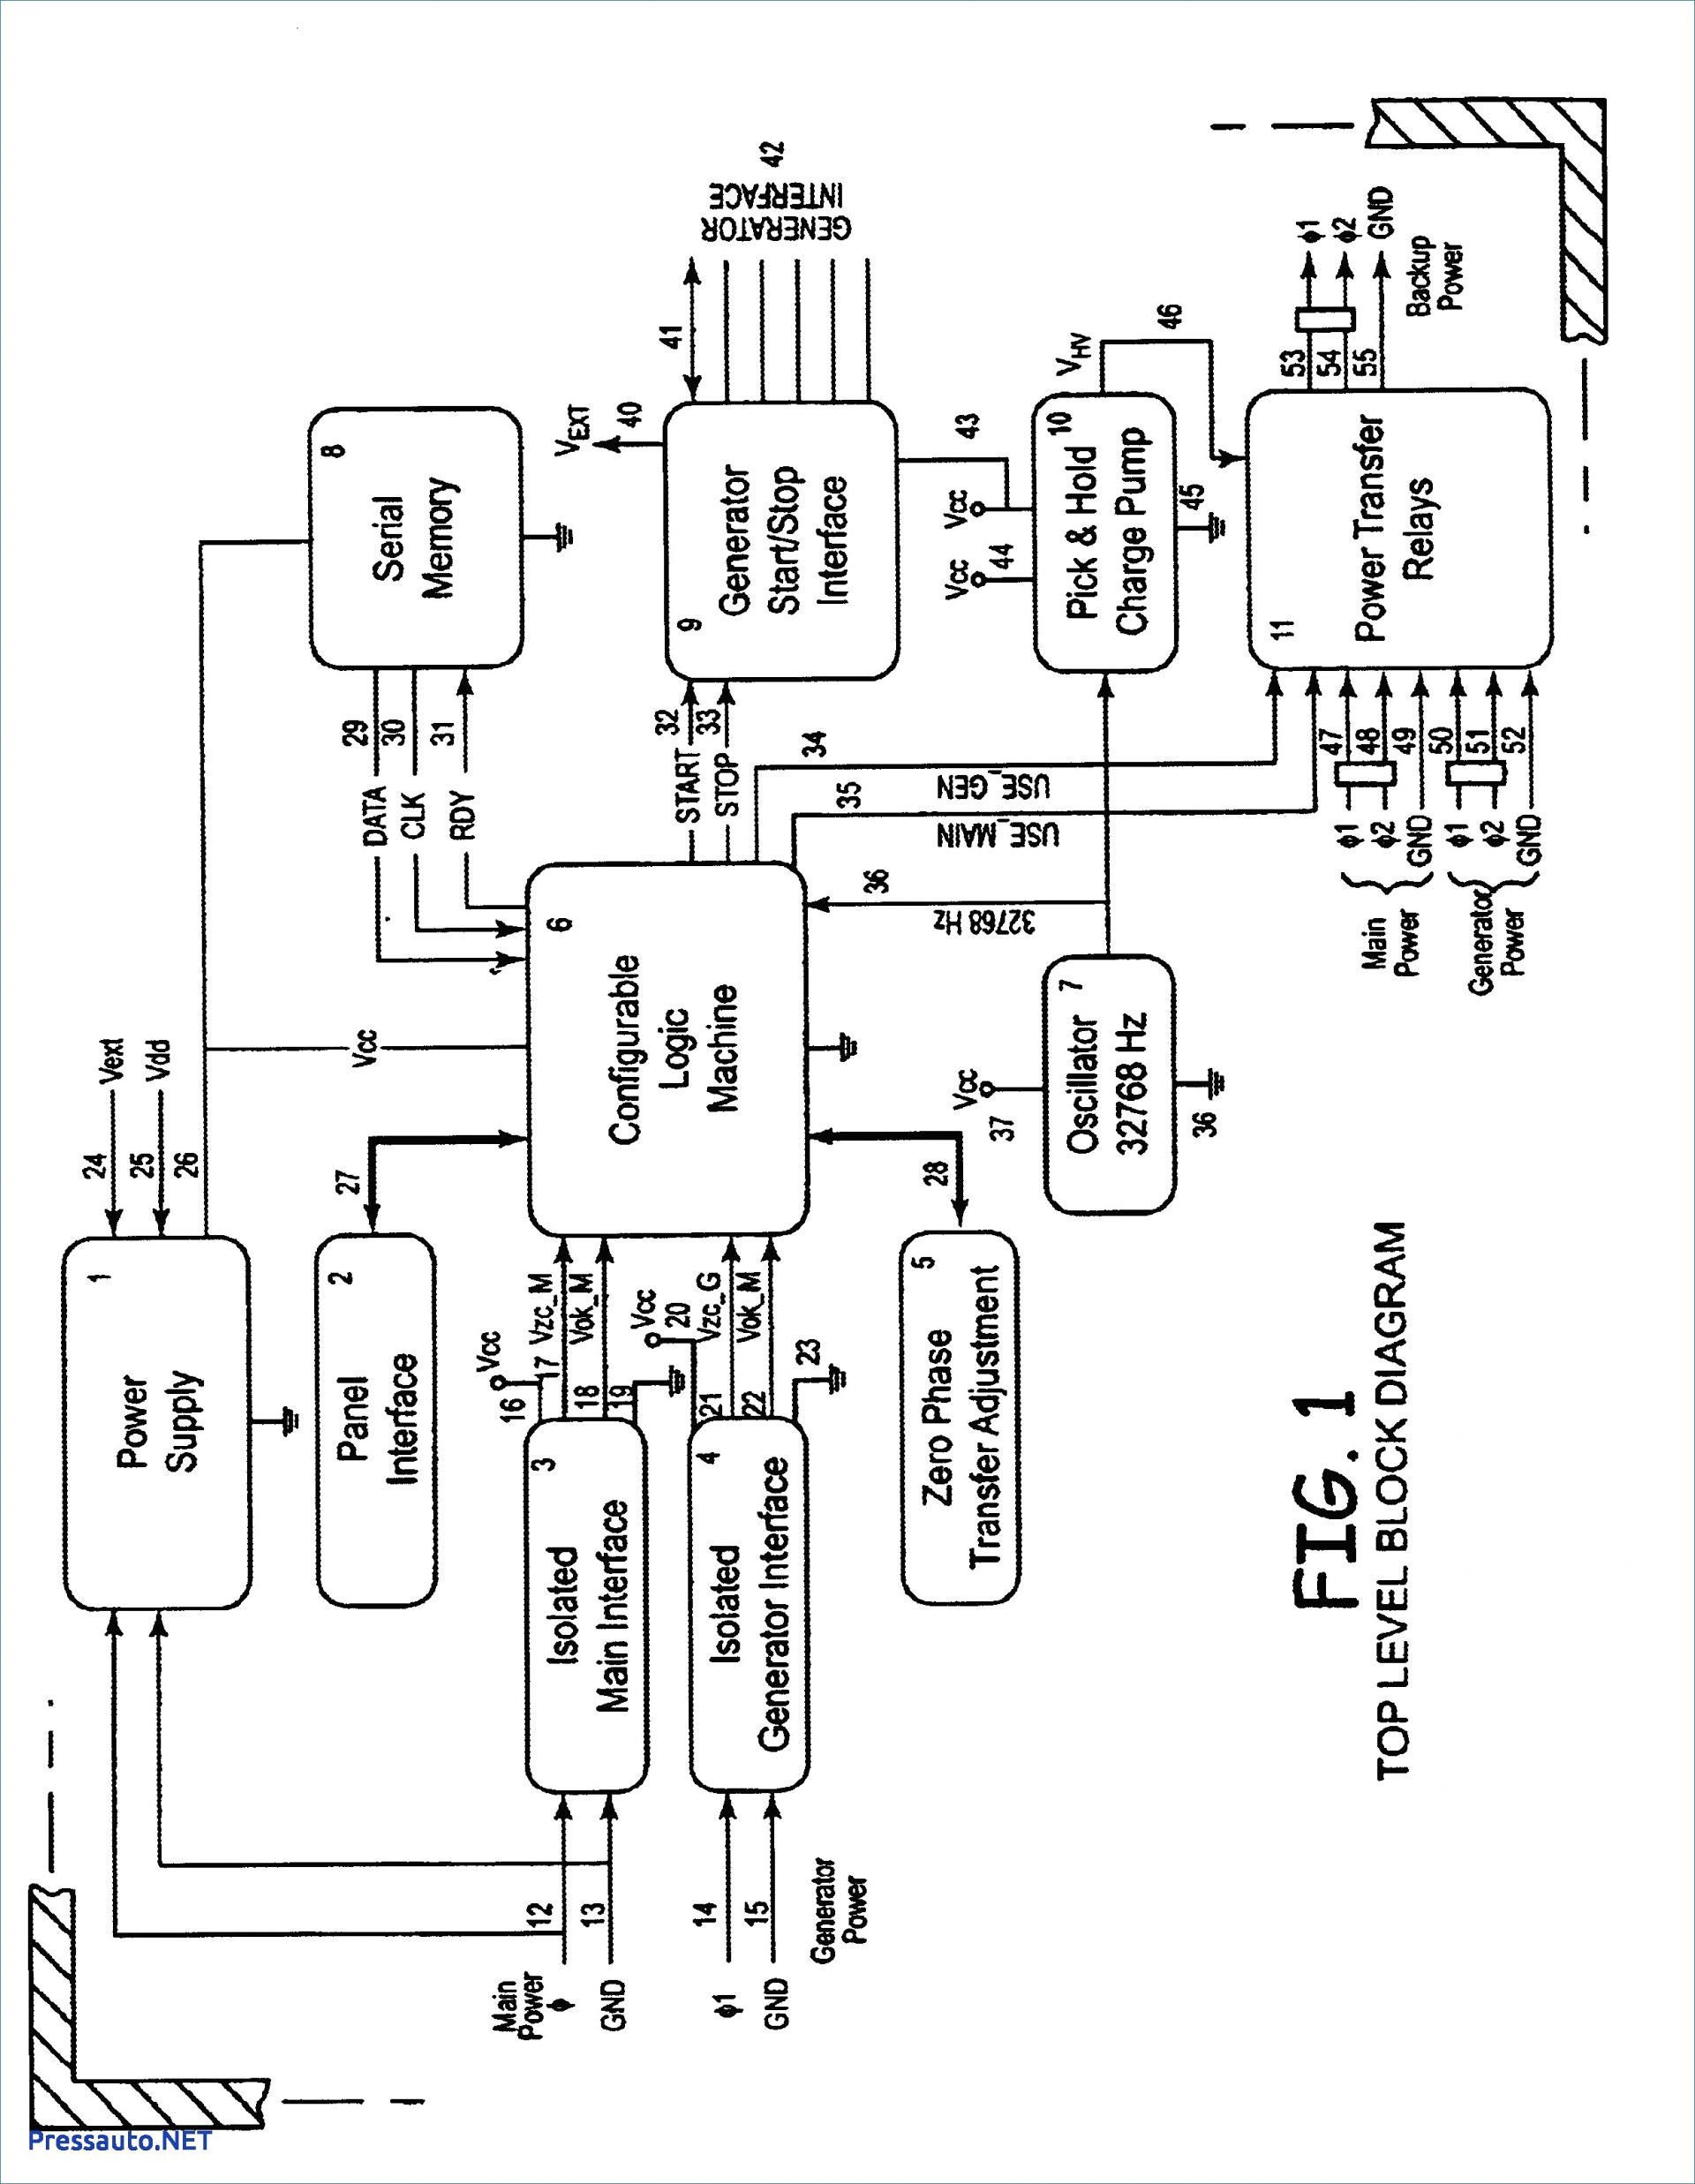 Generac Manual Transfer Switch Wiring Diagram Book Of Reliance - Generac Manual Transfer Switch Wiring Diagram